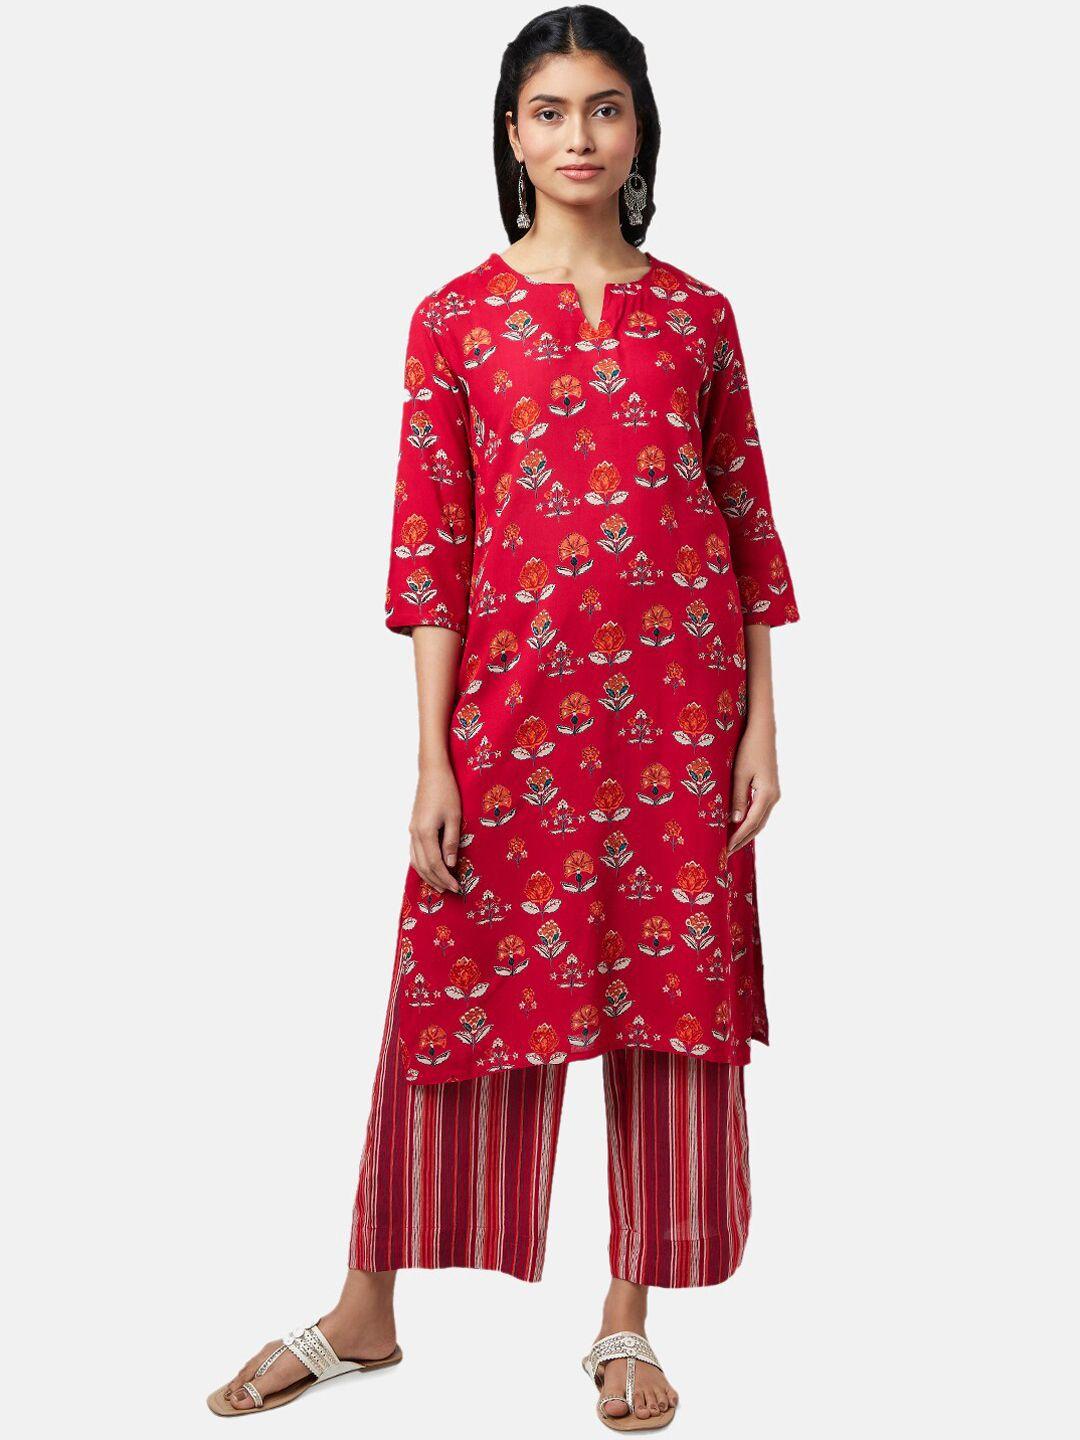 rangmanch by pantaloons women red floral printed kurta with palazzos